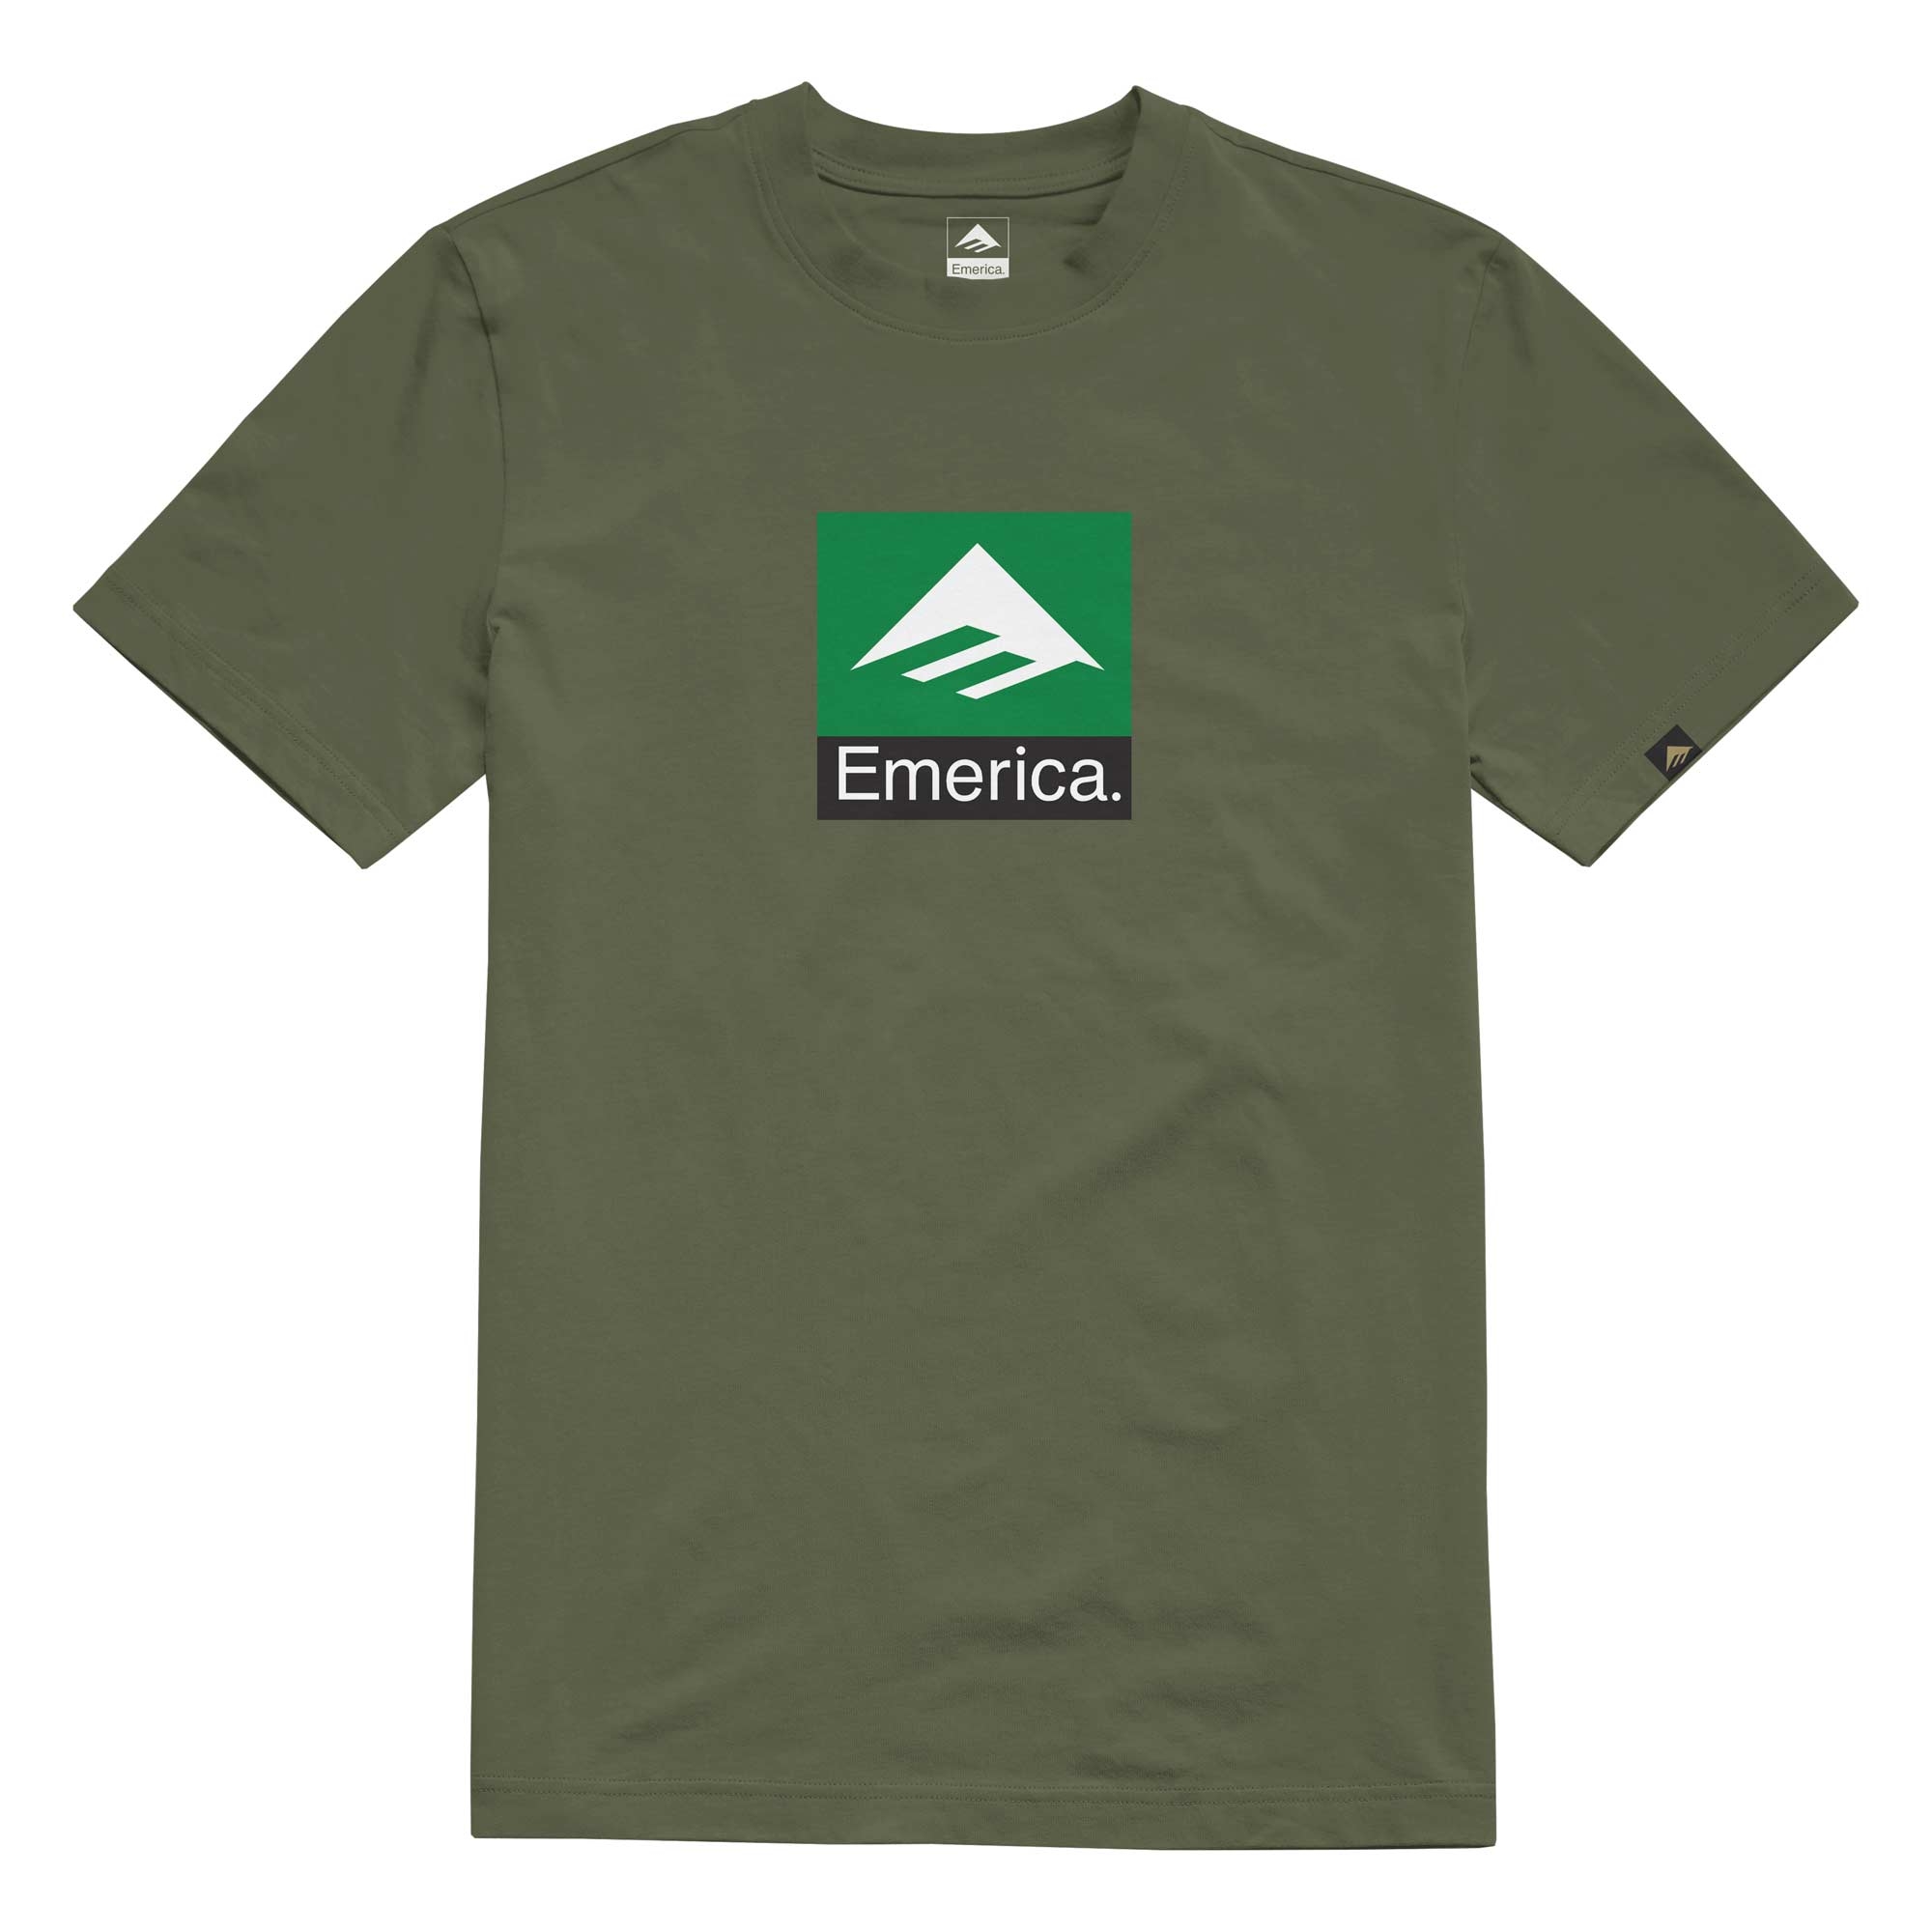 EMERICA T-Shirt CLASSIC COMBO military